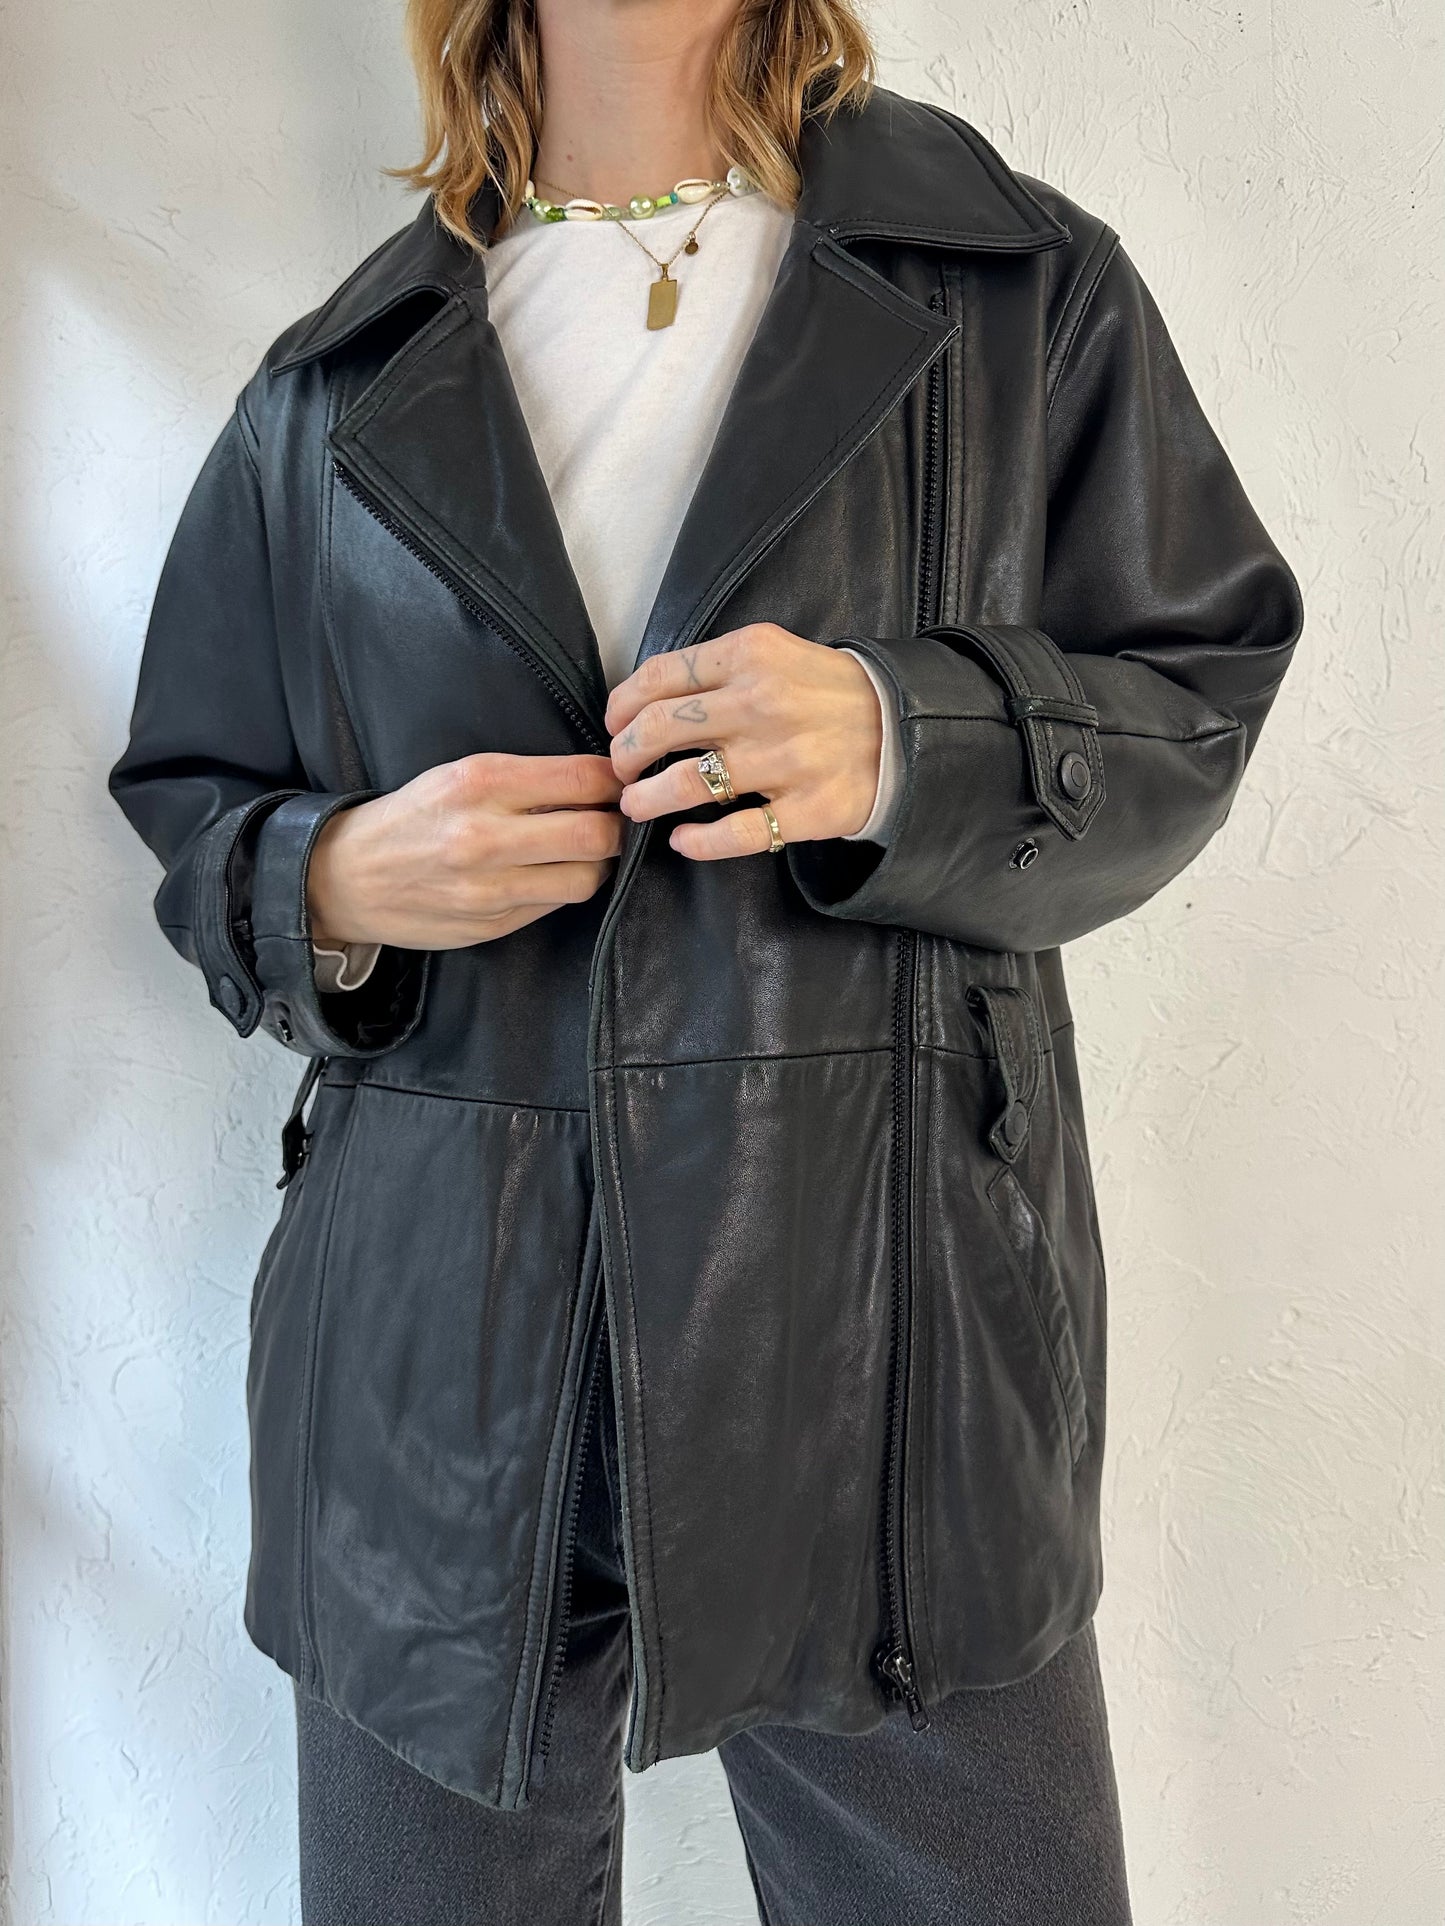 90s 'Danier' Lined Black Leather Jacket / Small - Medium